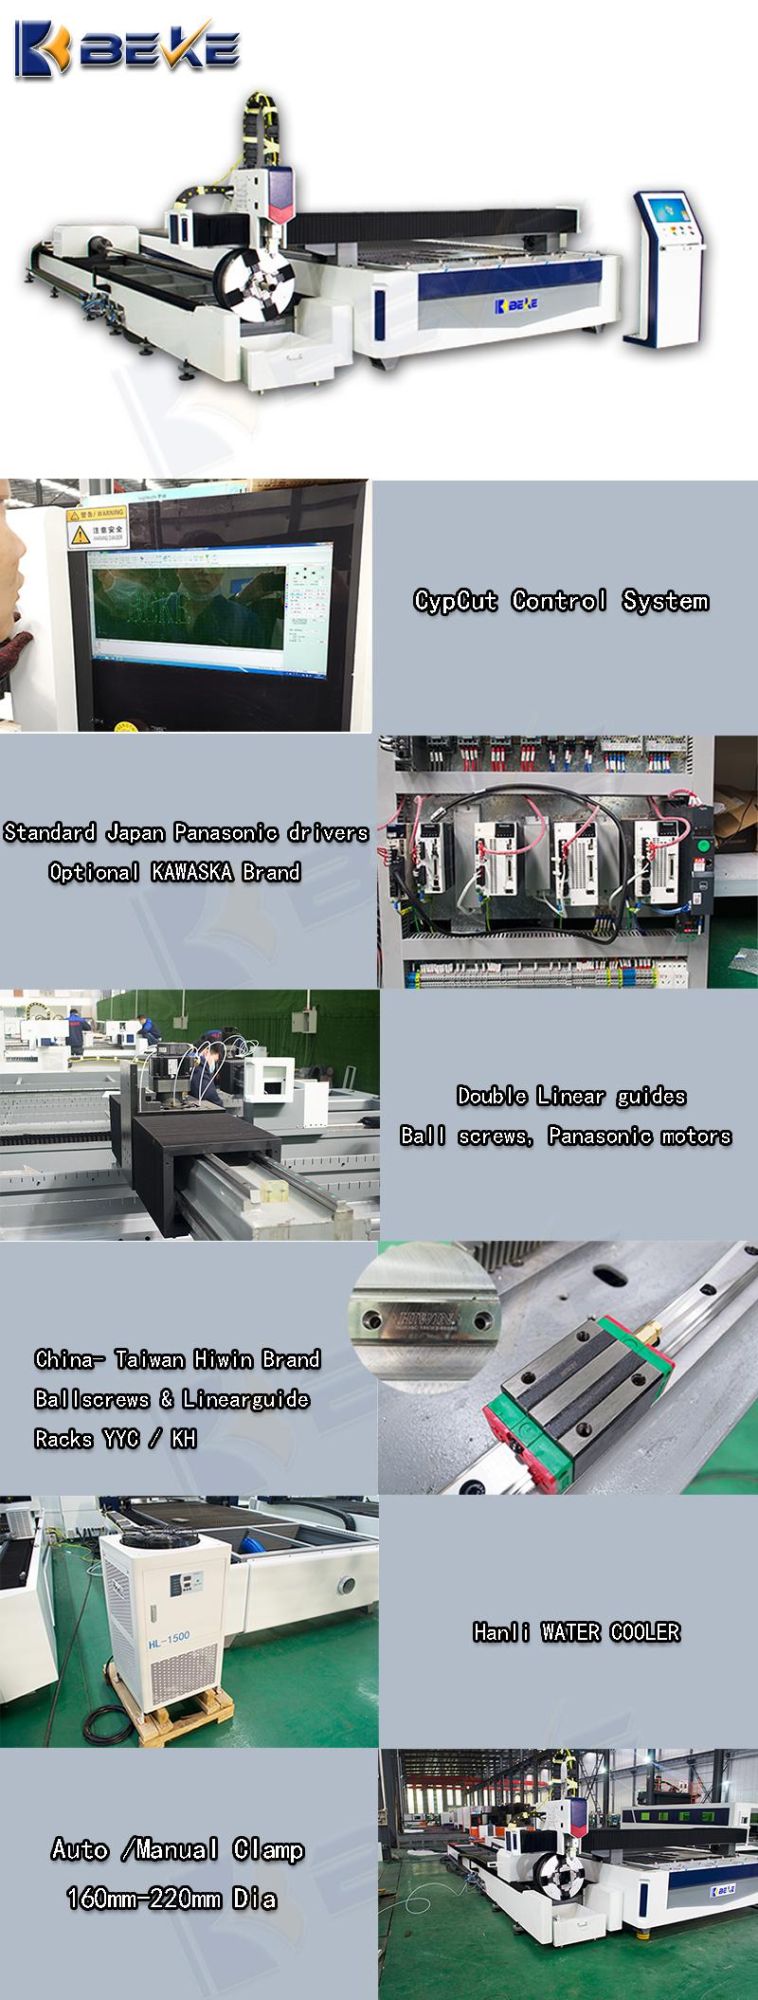 Nanjing Beke High Performance 4015 2000W Plate Tube Mild Steelcnc Laser Cutting Machine Price